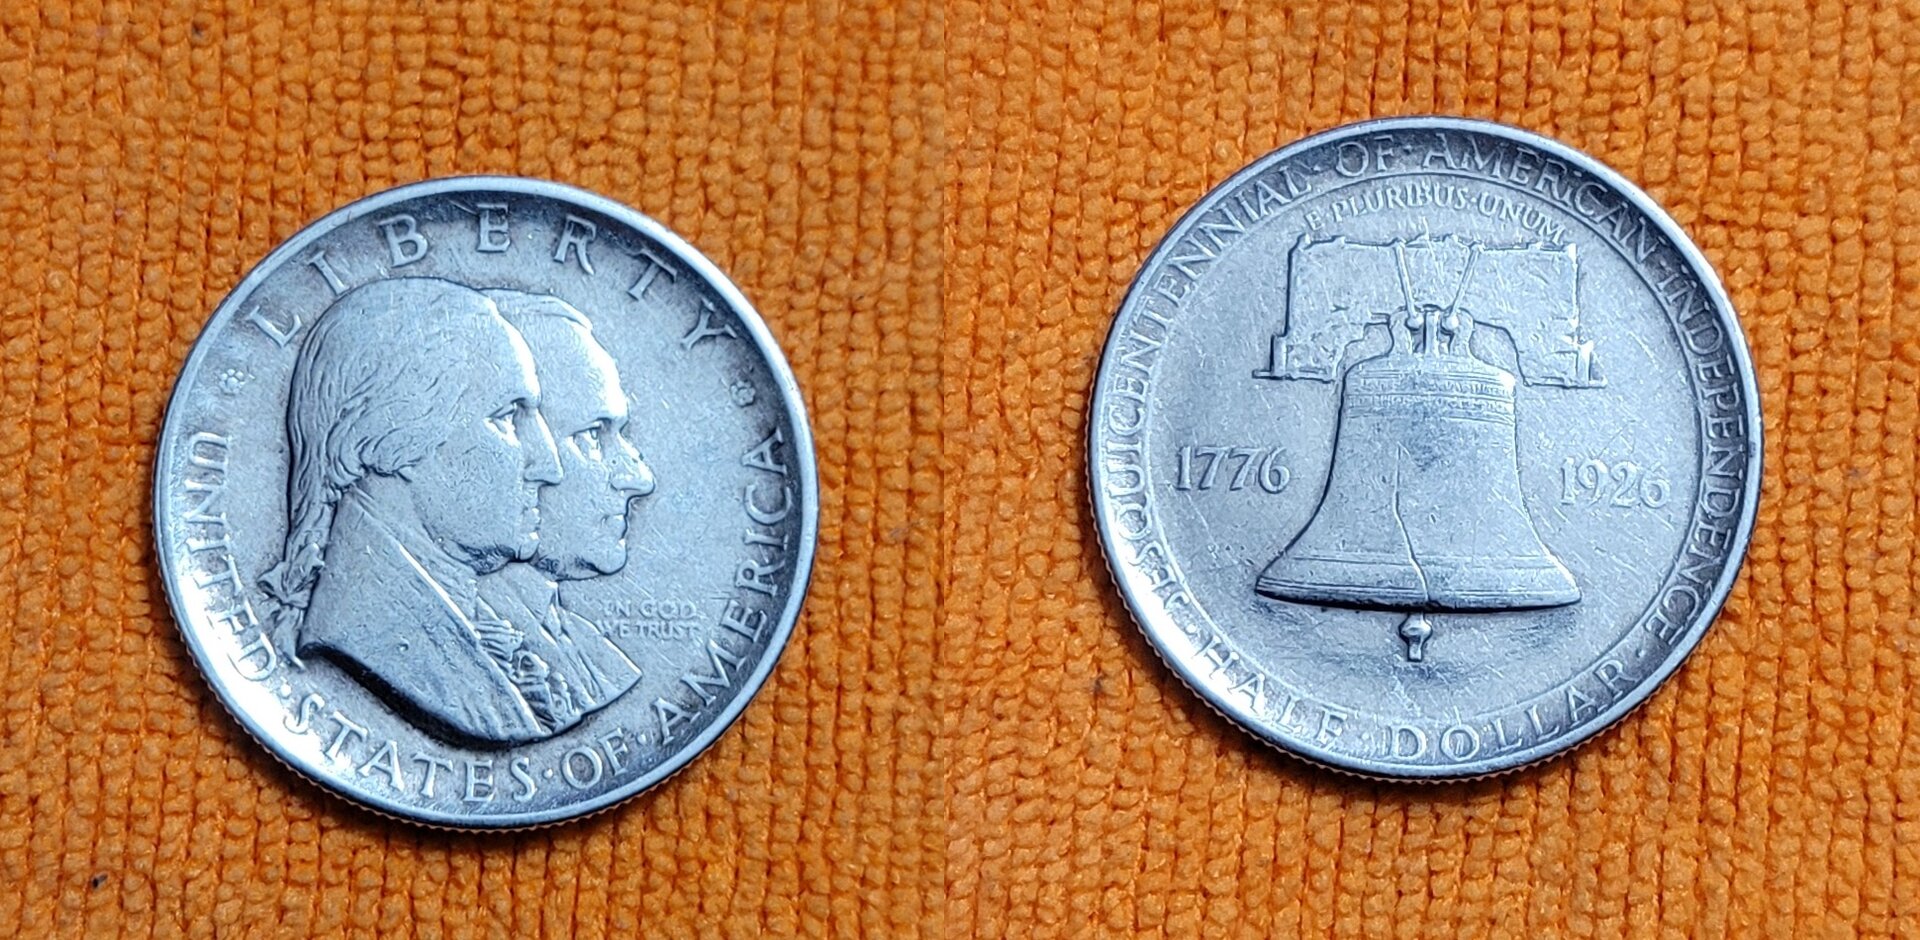 1926 Pocket coin 3 13 22 A-horz.jpg